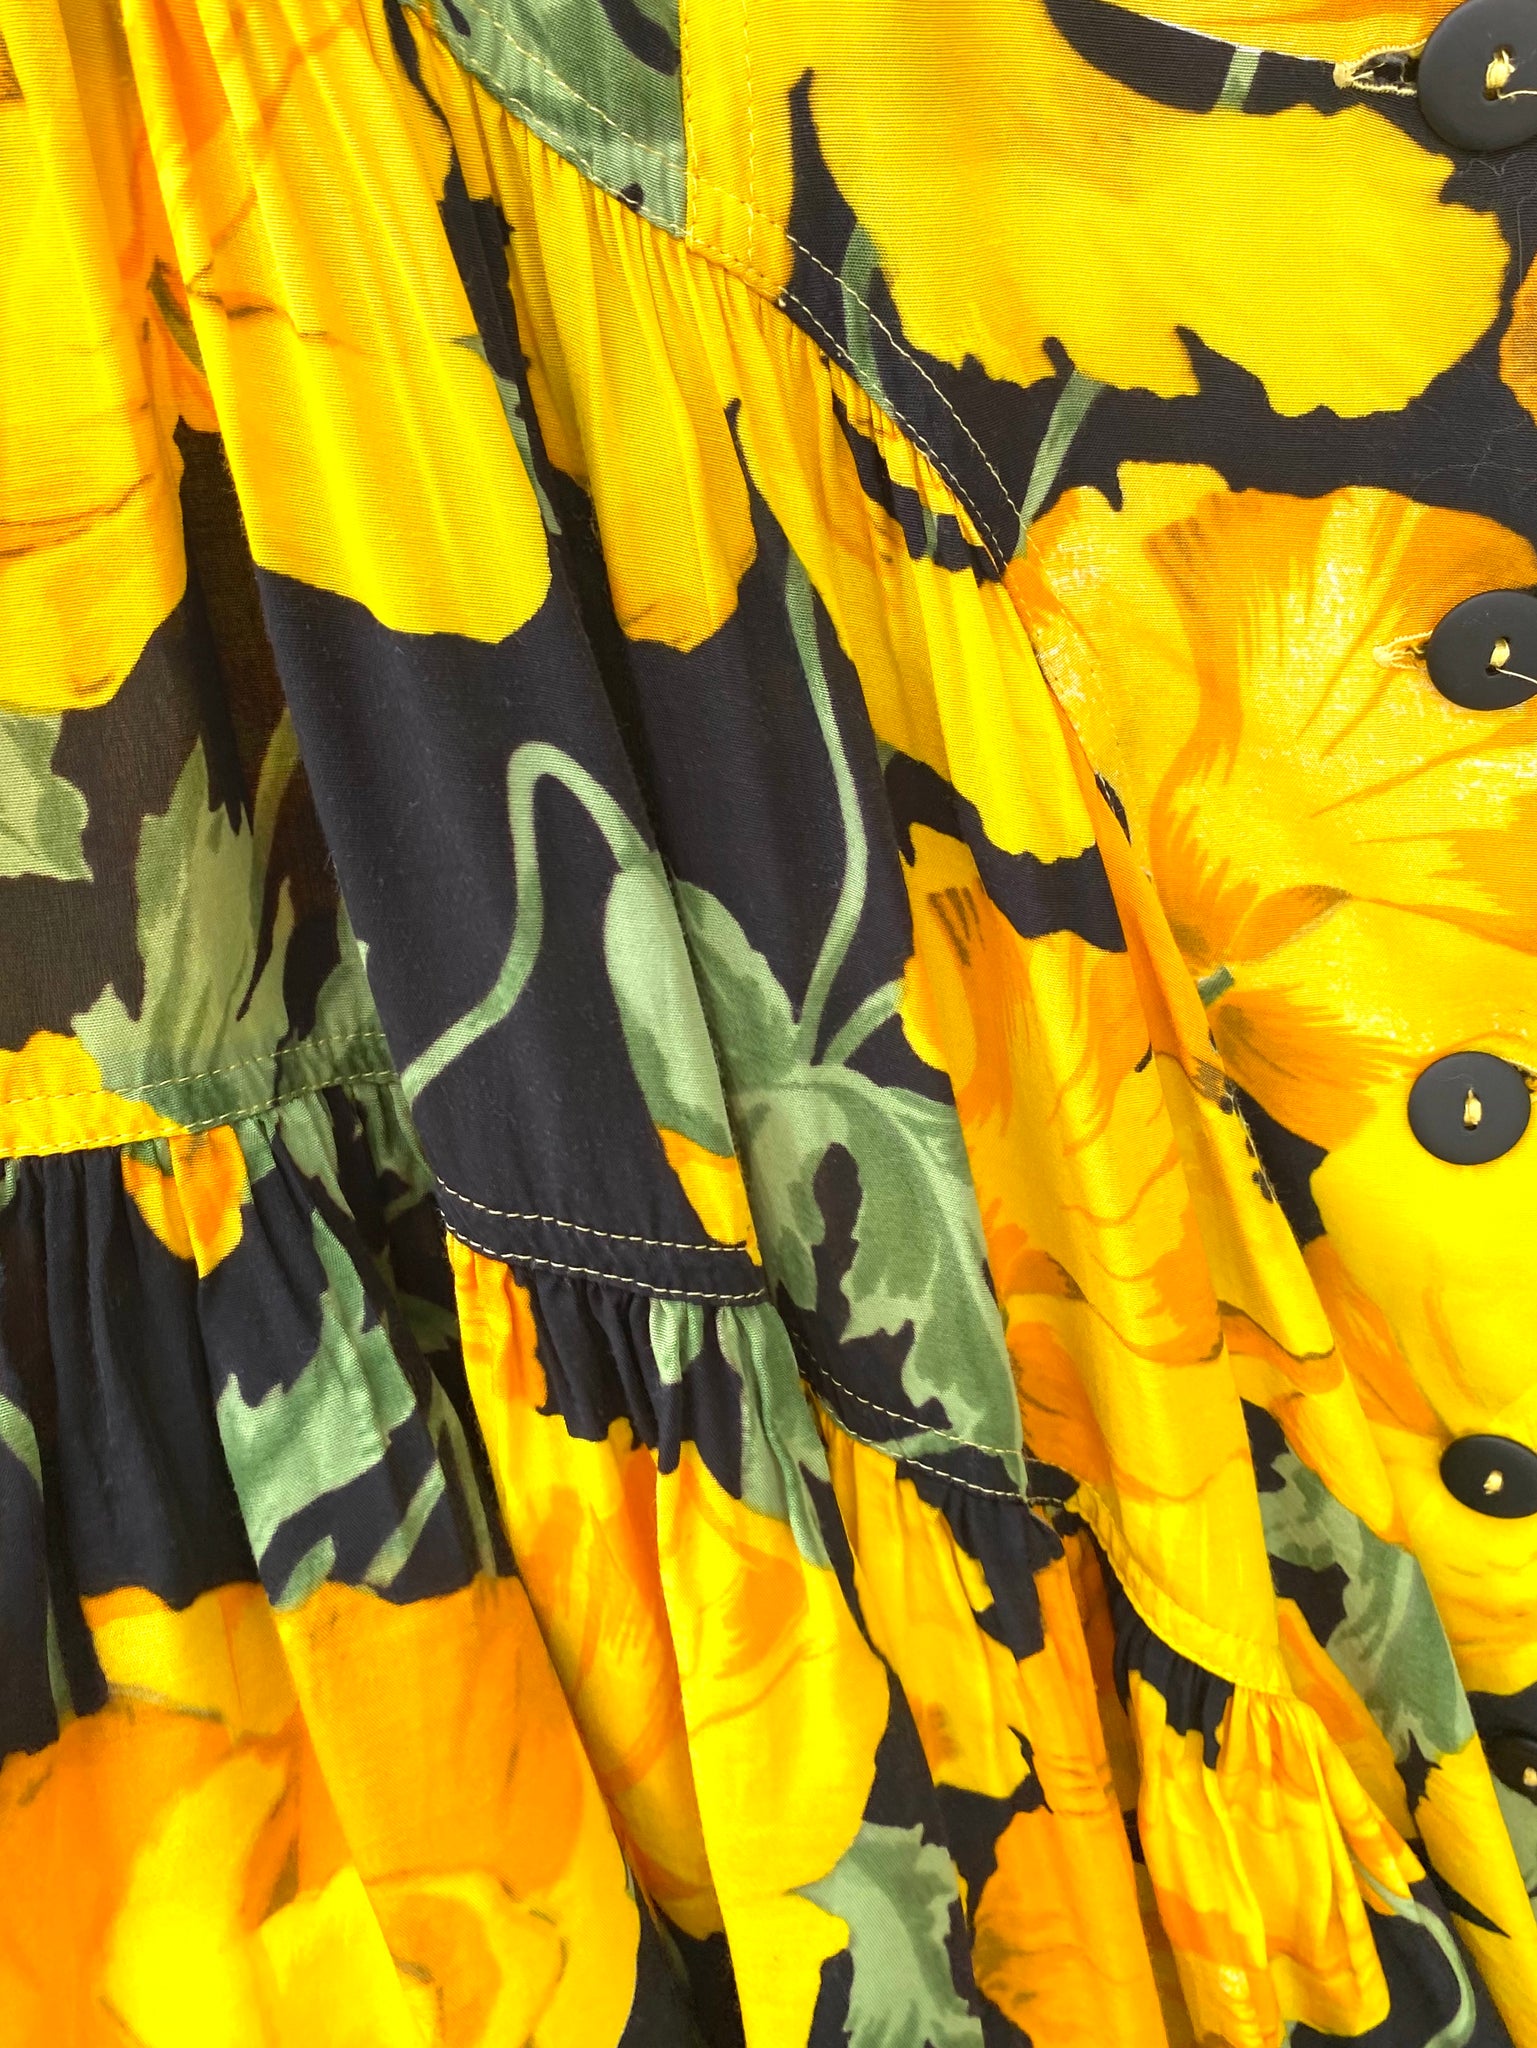 VINTAGE: Halter Dress - Yellow Poppy